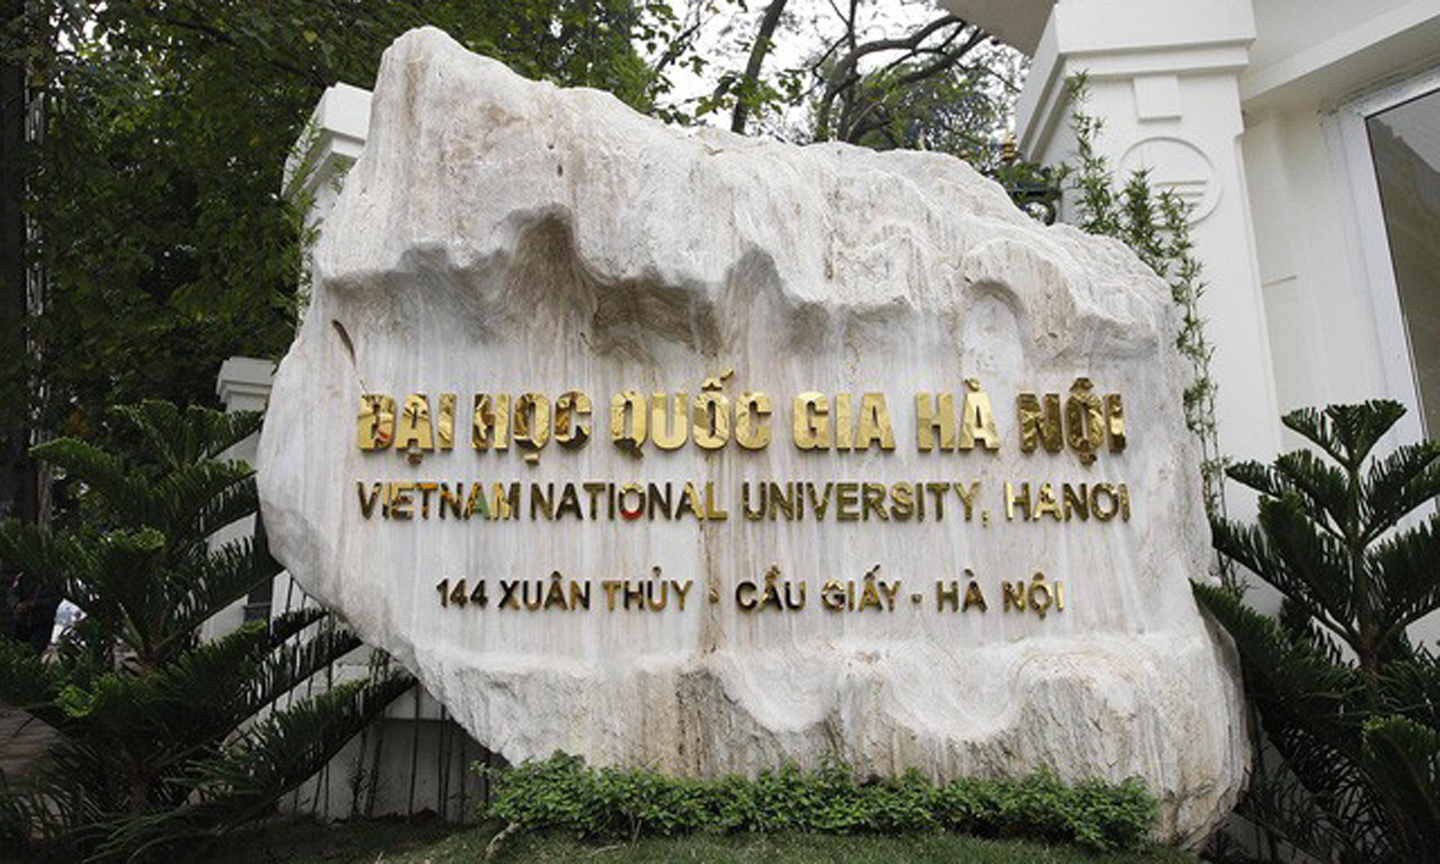 Vietnam National University Hanoi ranks first in the top 100 universities in Vietnam.